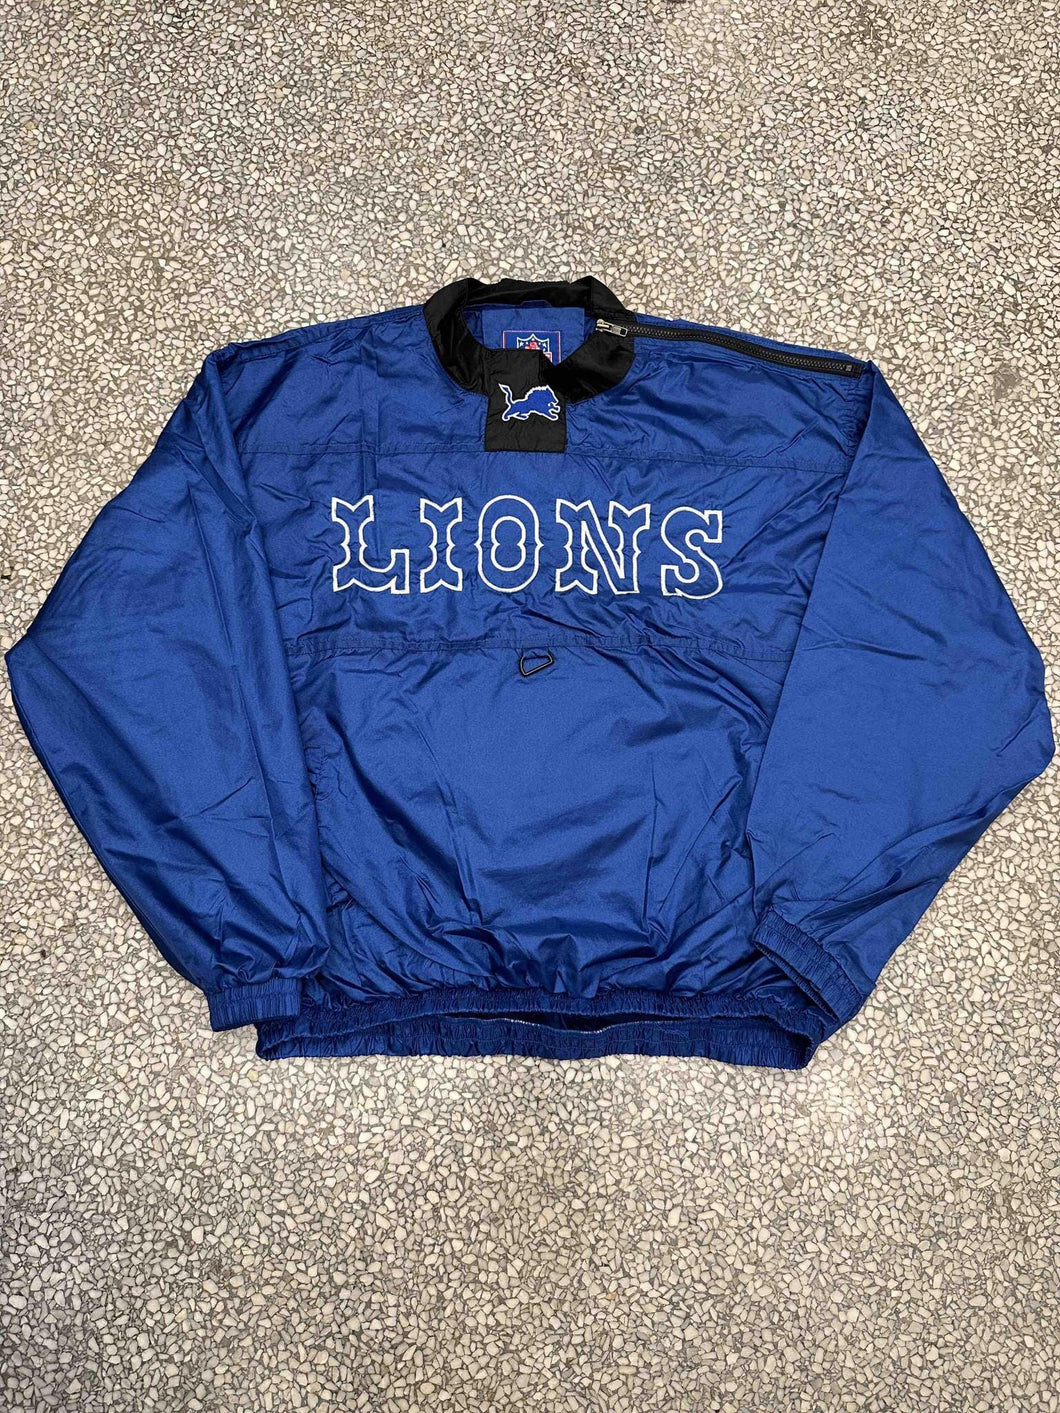 Detroit Lions Vintage 90s Windbreaker Shell Jacket ABC Vintage 